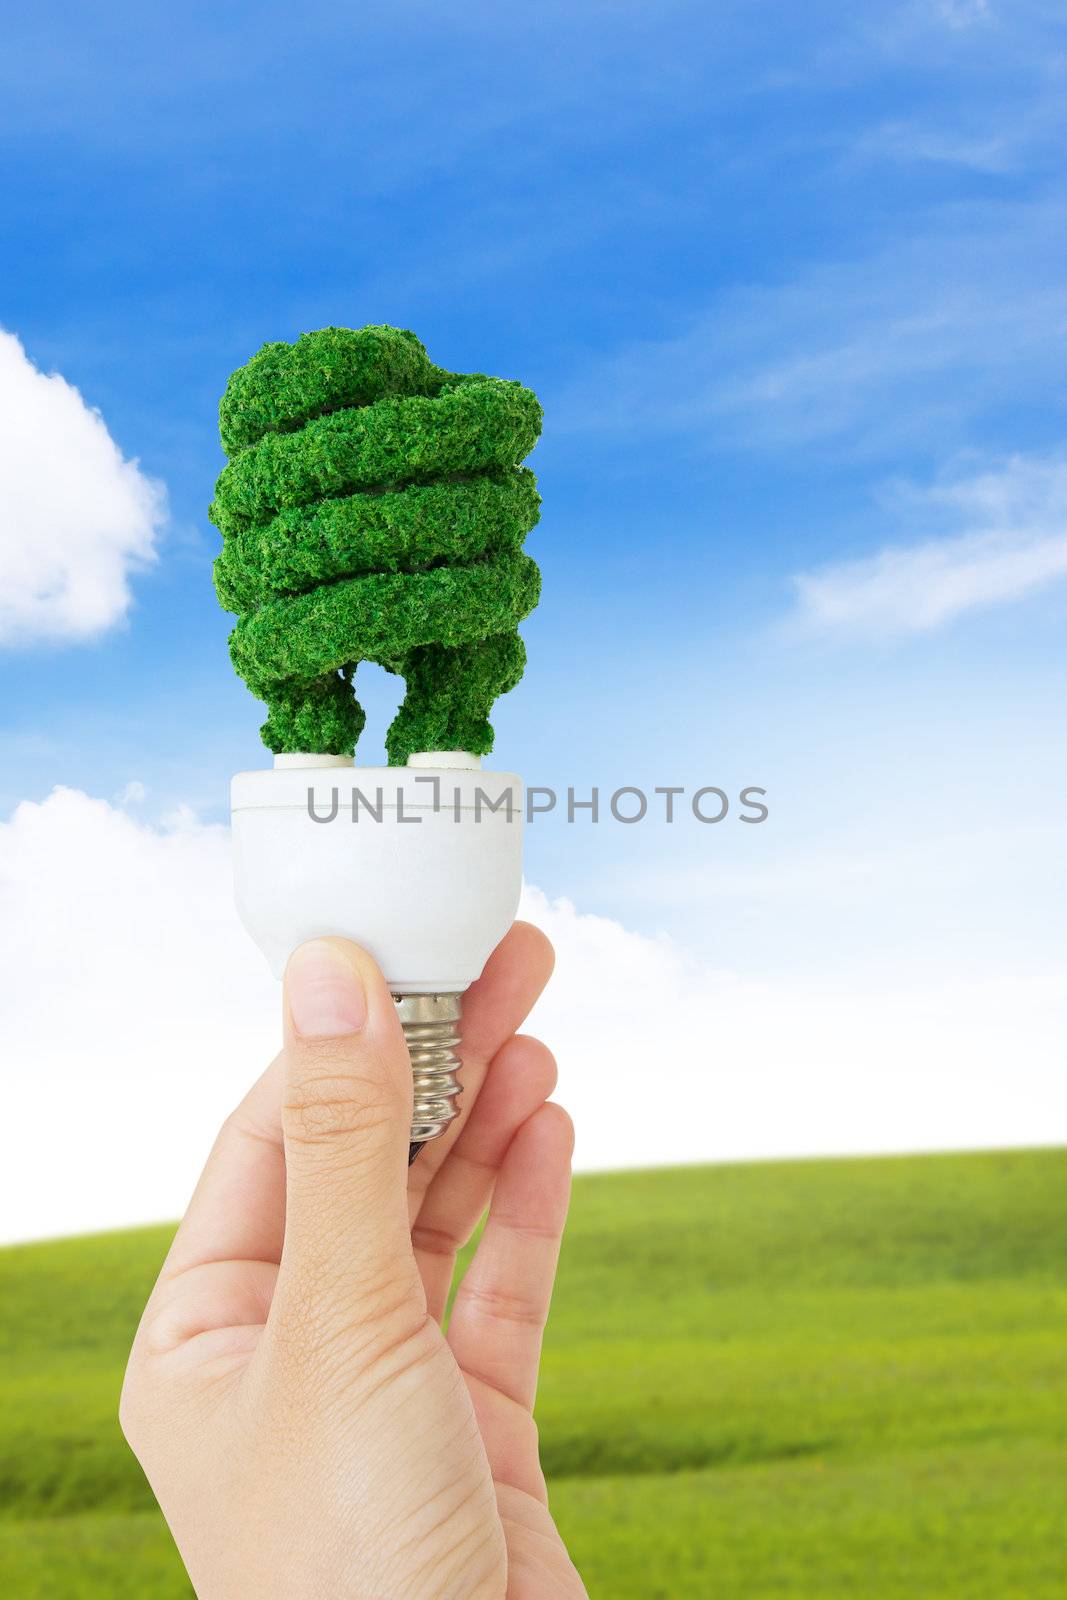 eco light bulb by ponsulak